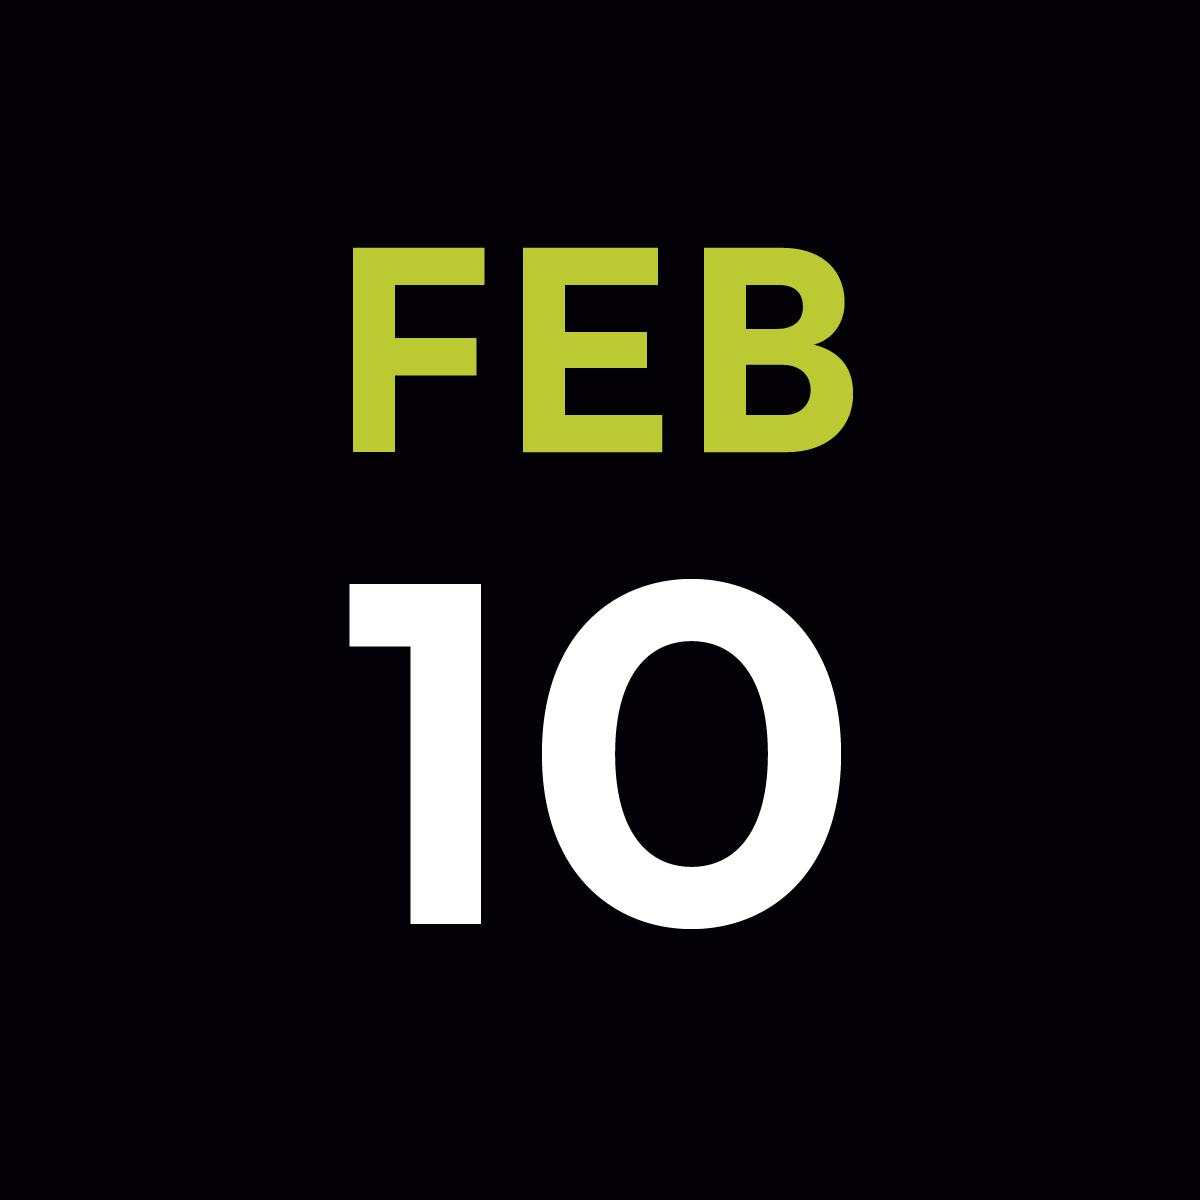 February 10 Icon